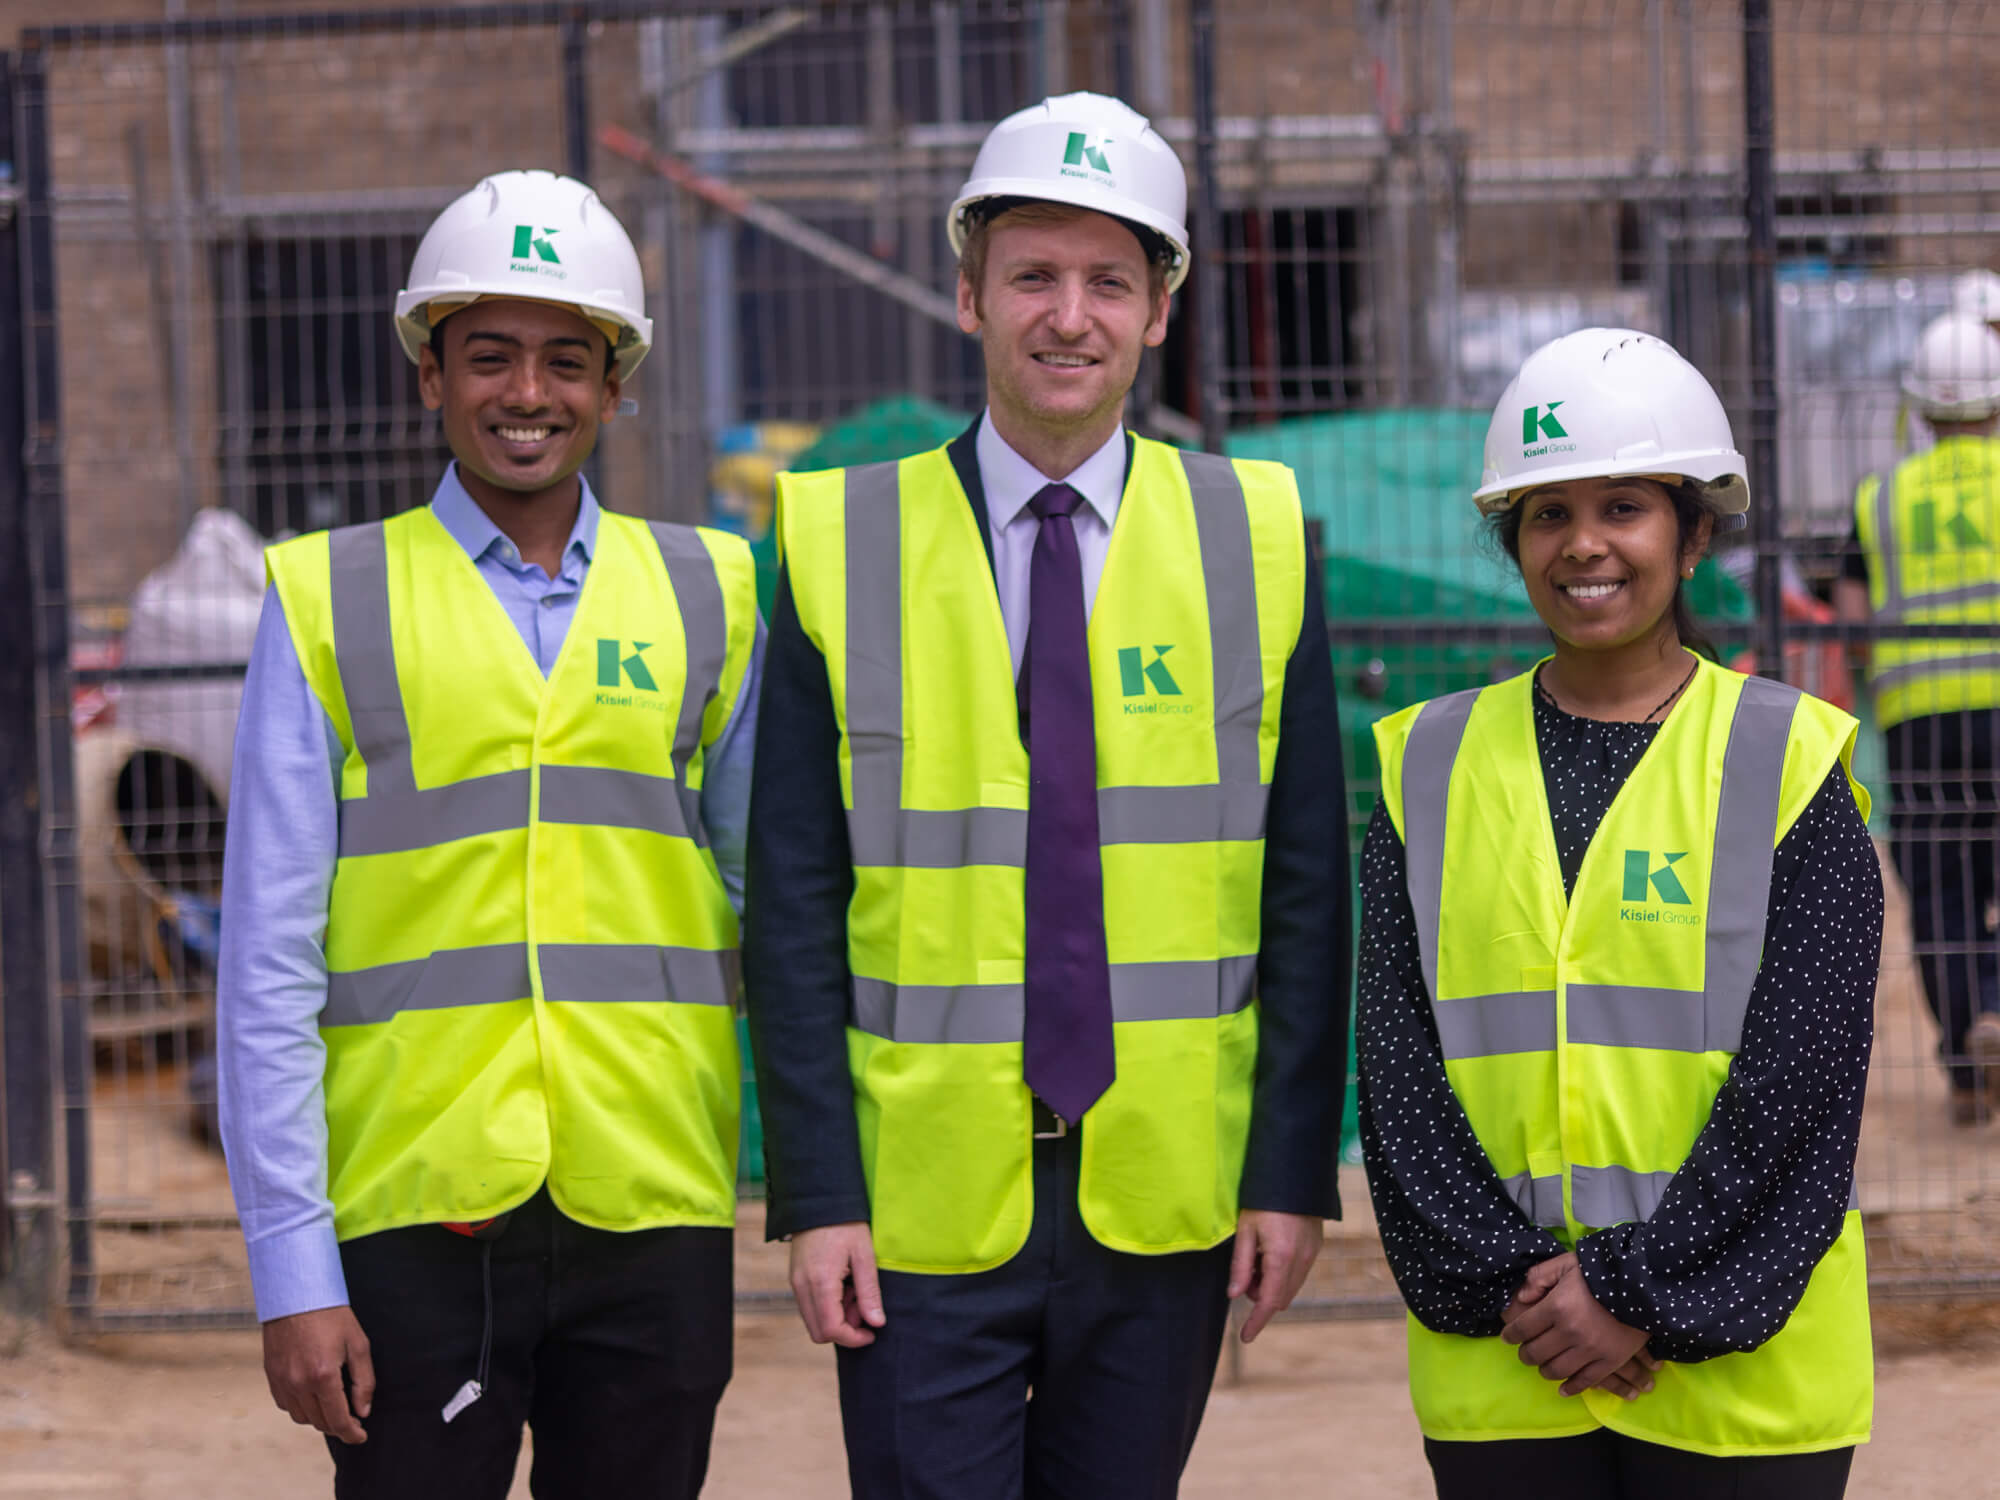 Construction Minister Lee Rowley MP site visit, Kisel Ltd, London 1.jpg